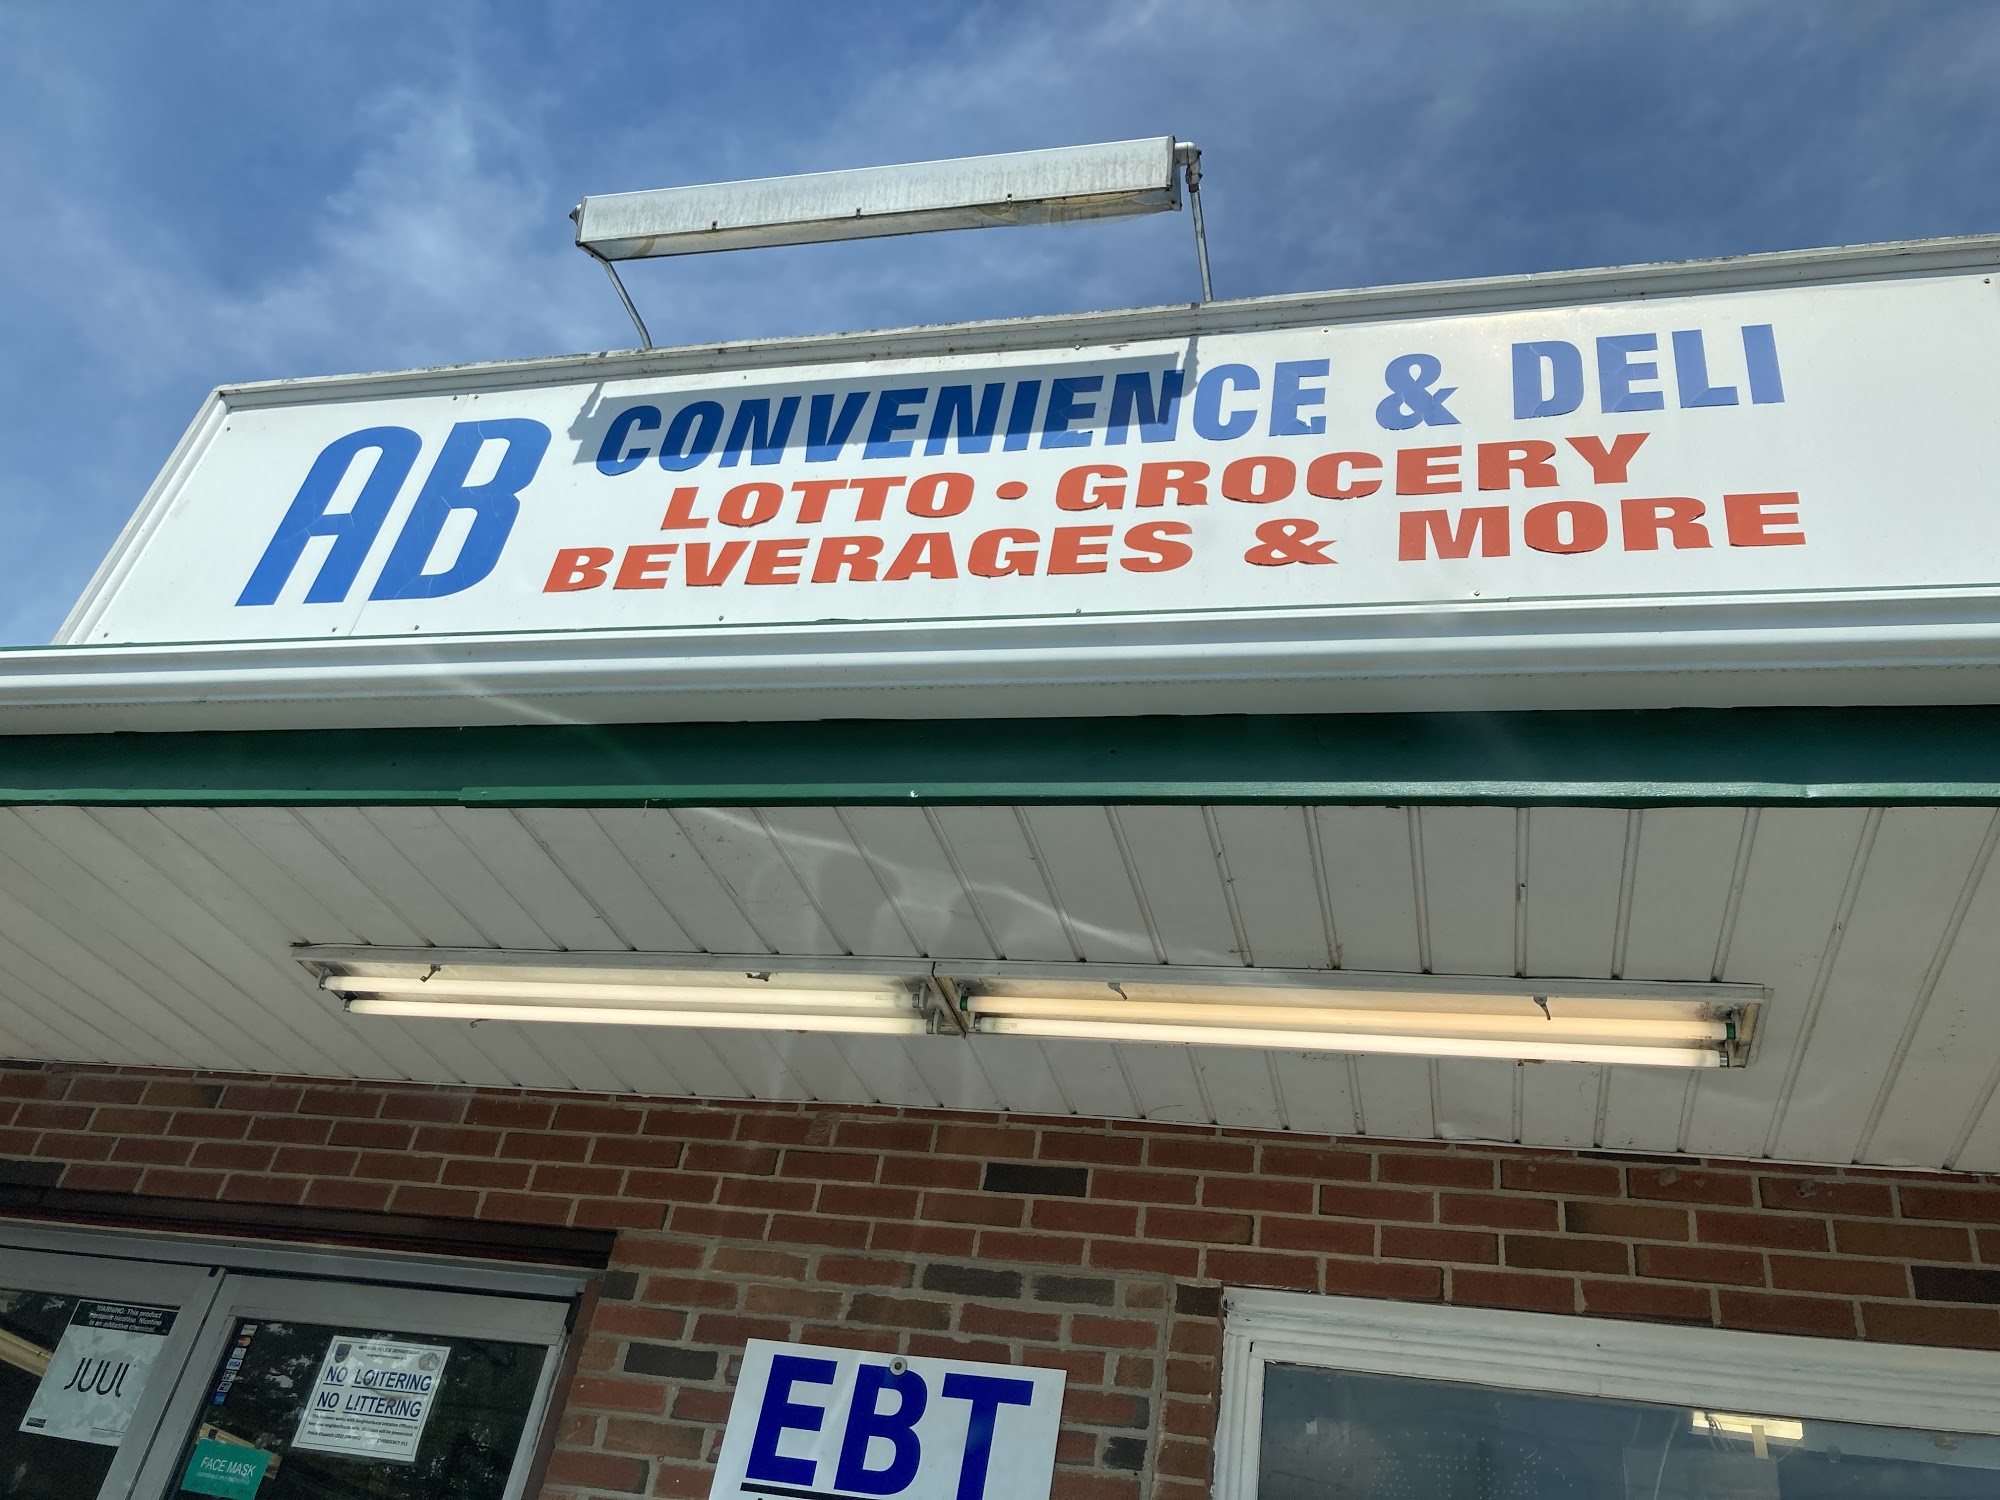 A B Convenience Store